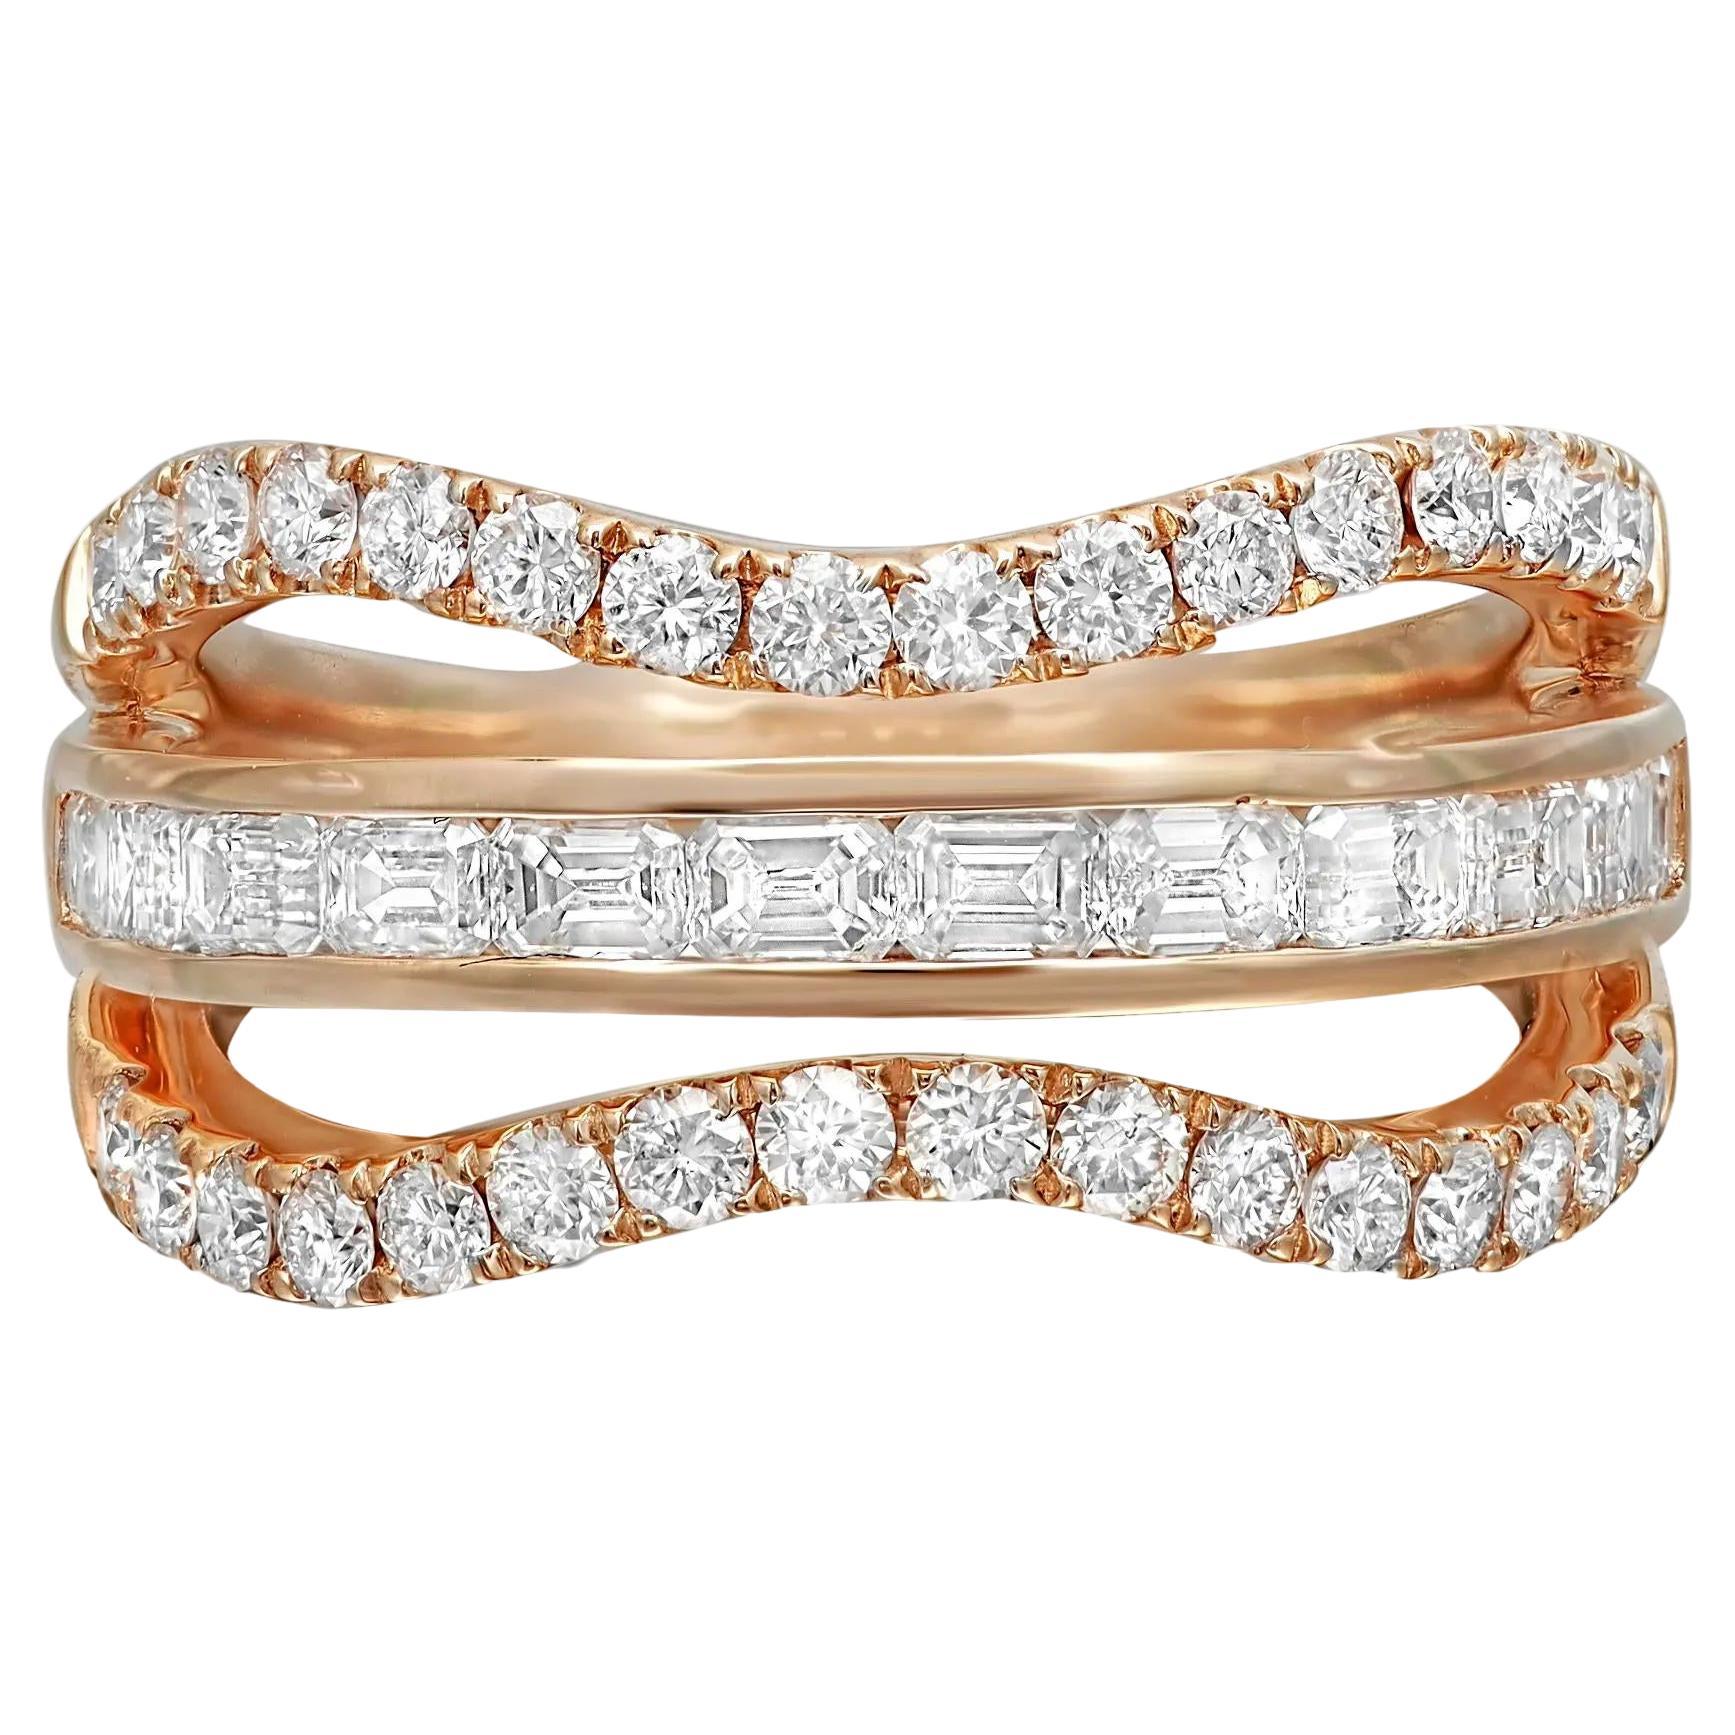 Emerald Cut & Round Cut Diamond Band Ring 18K Rose Gold 1.61Cttw Size 6.5